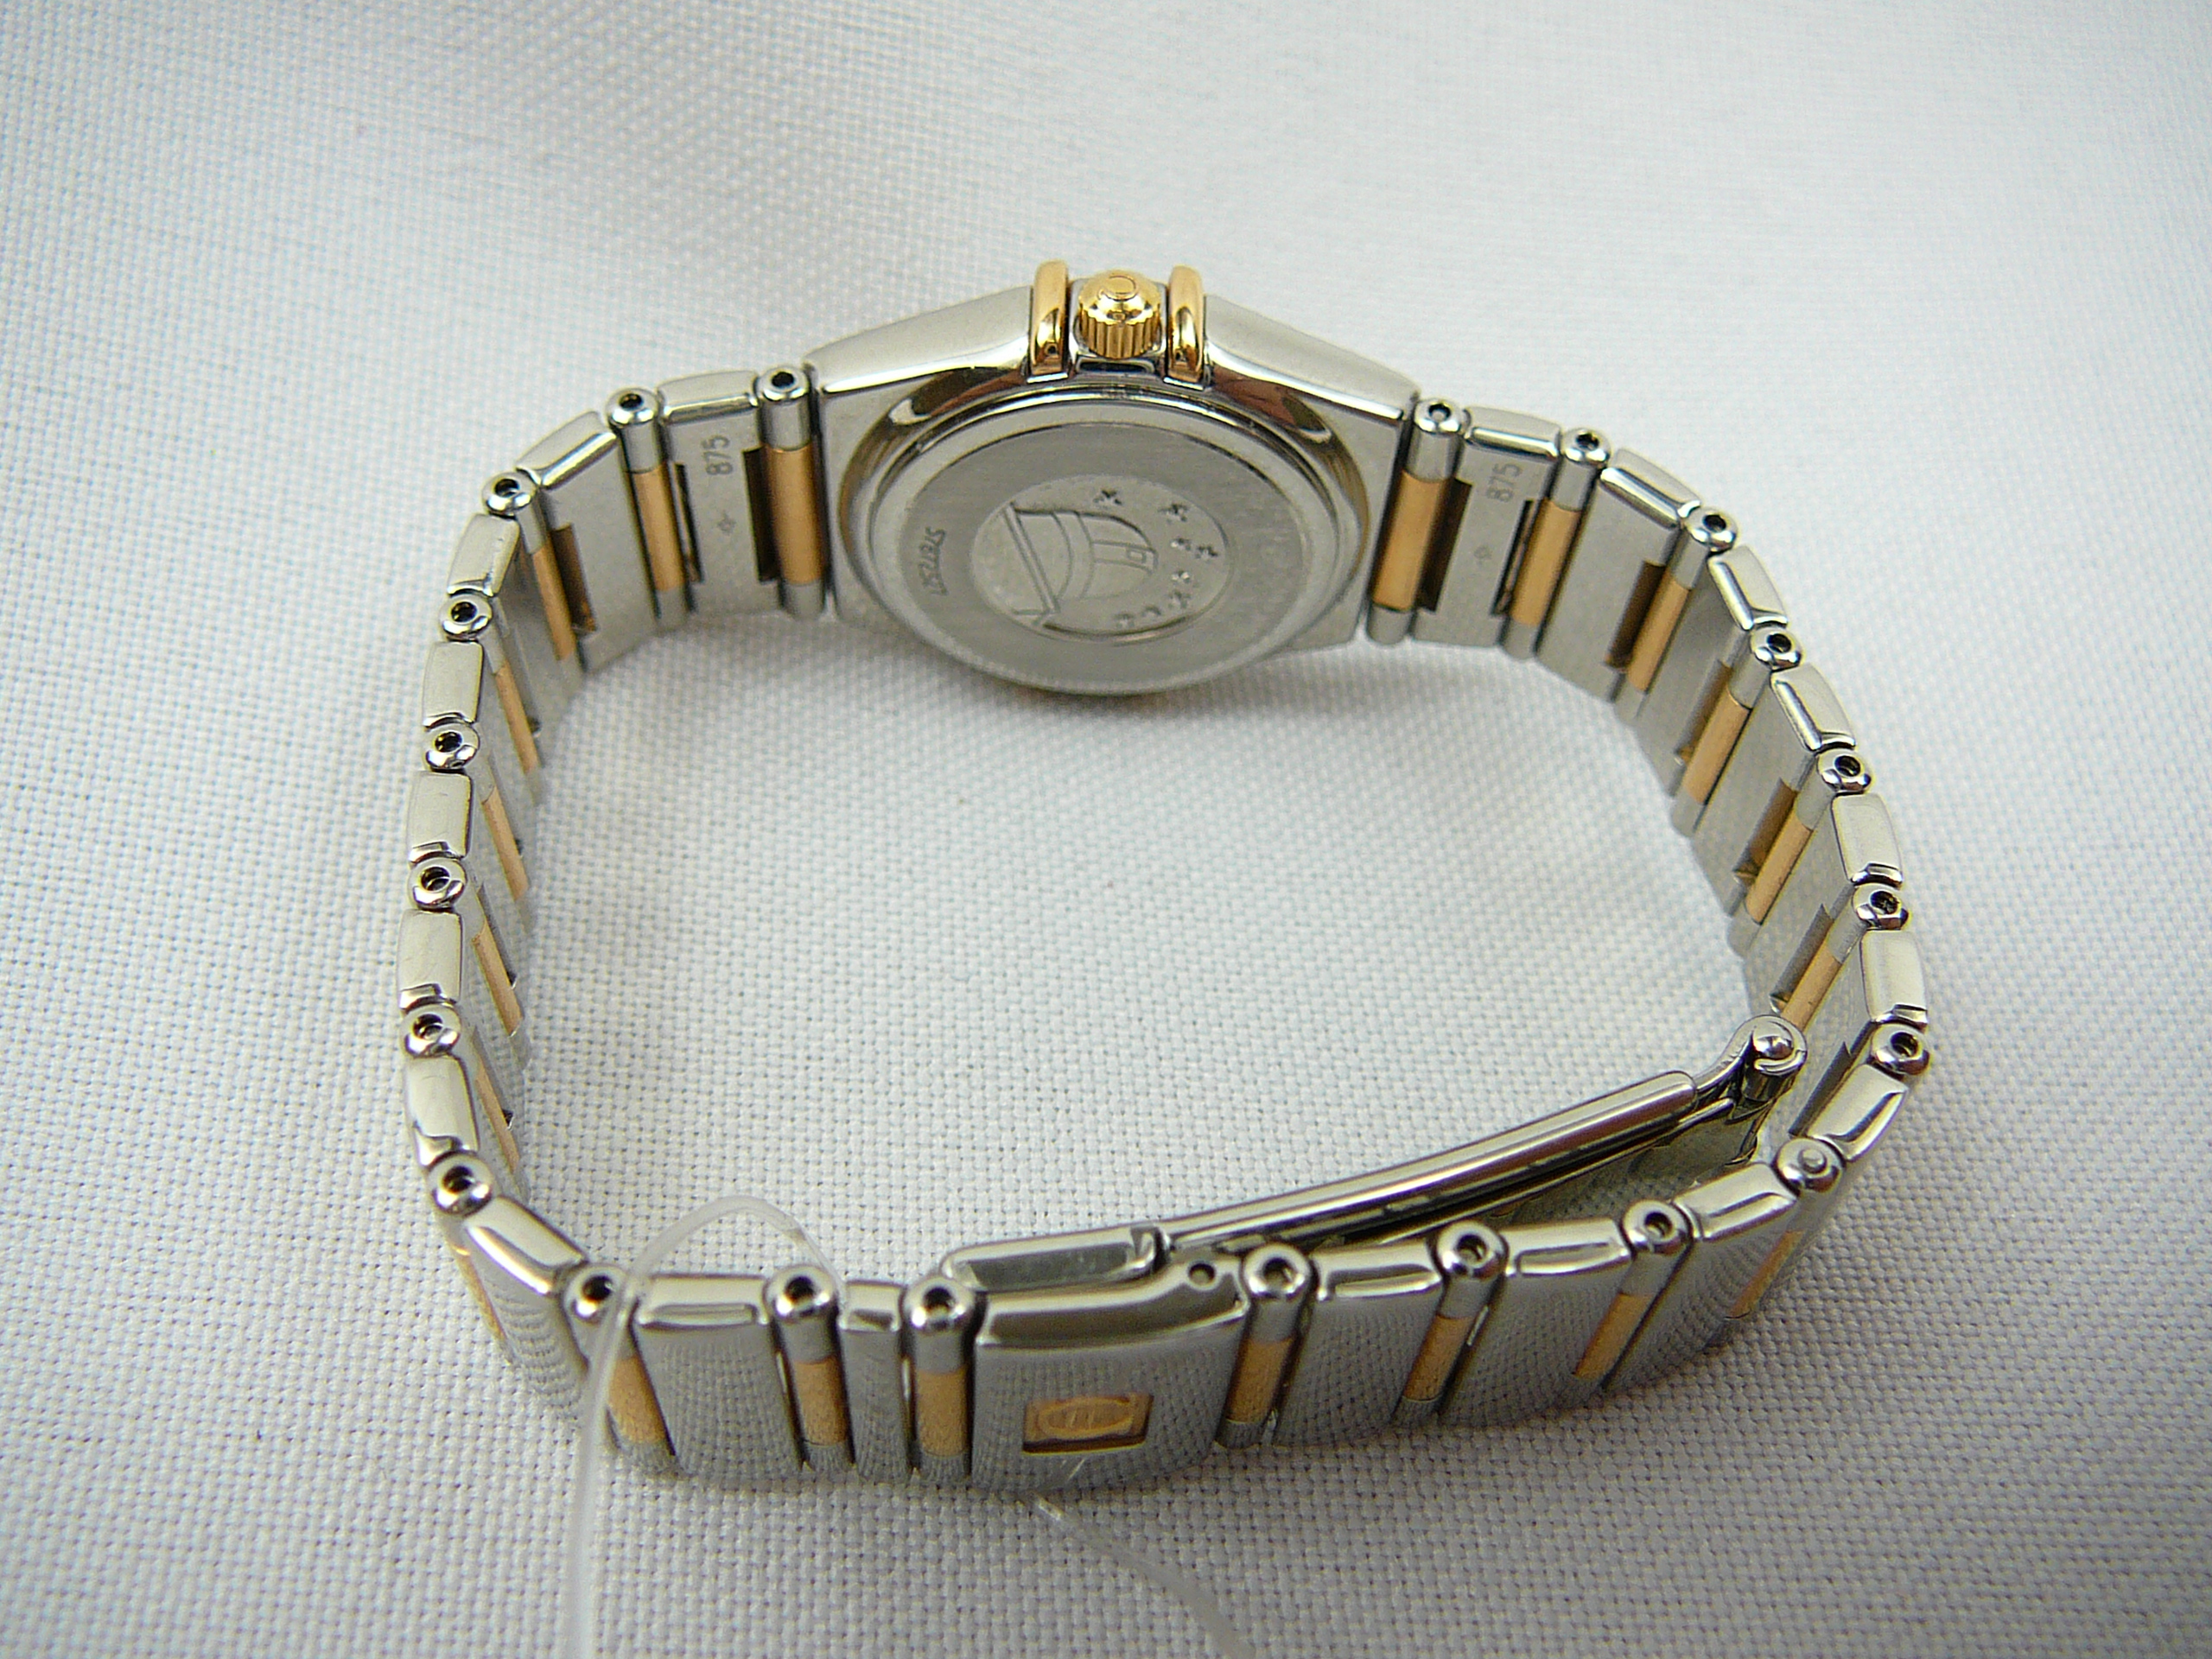 Ladies Omega wrist watch - Image 3 of 3